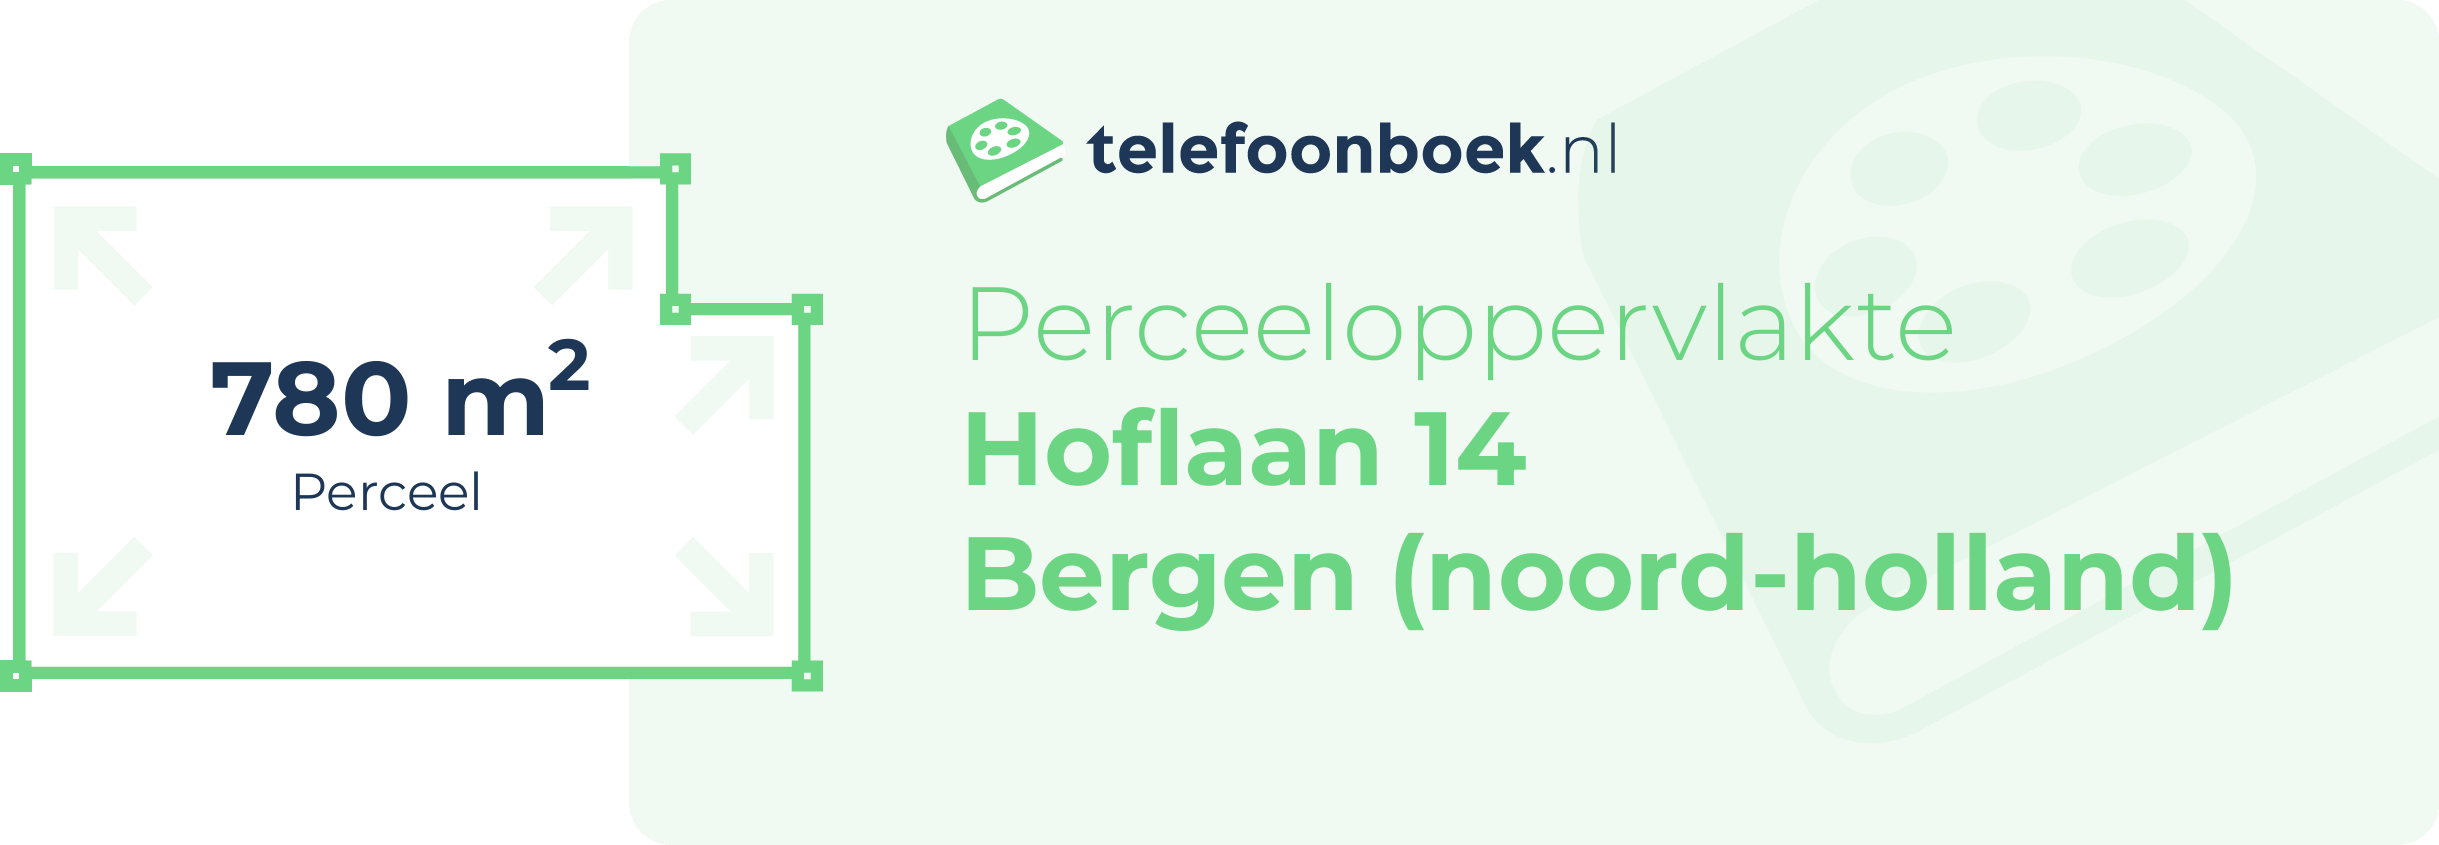 Perceeloppervlakte Hoflaan 14 Bergen (Noord-Holland)